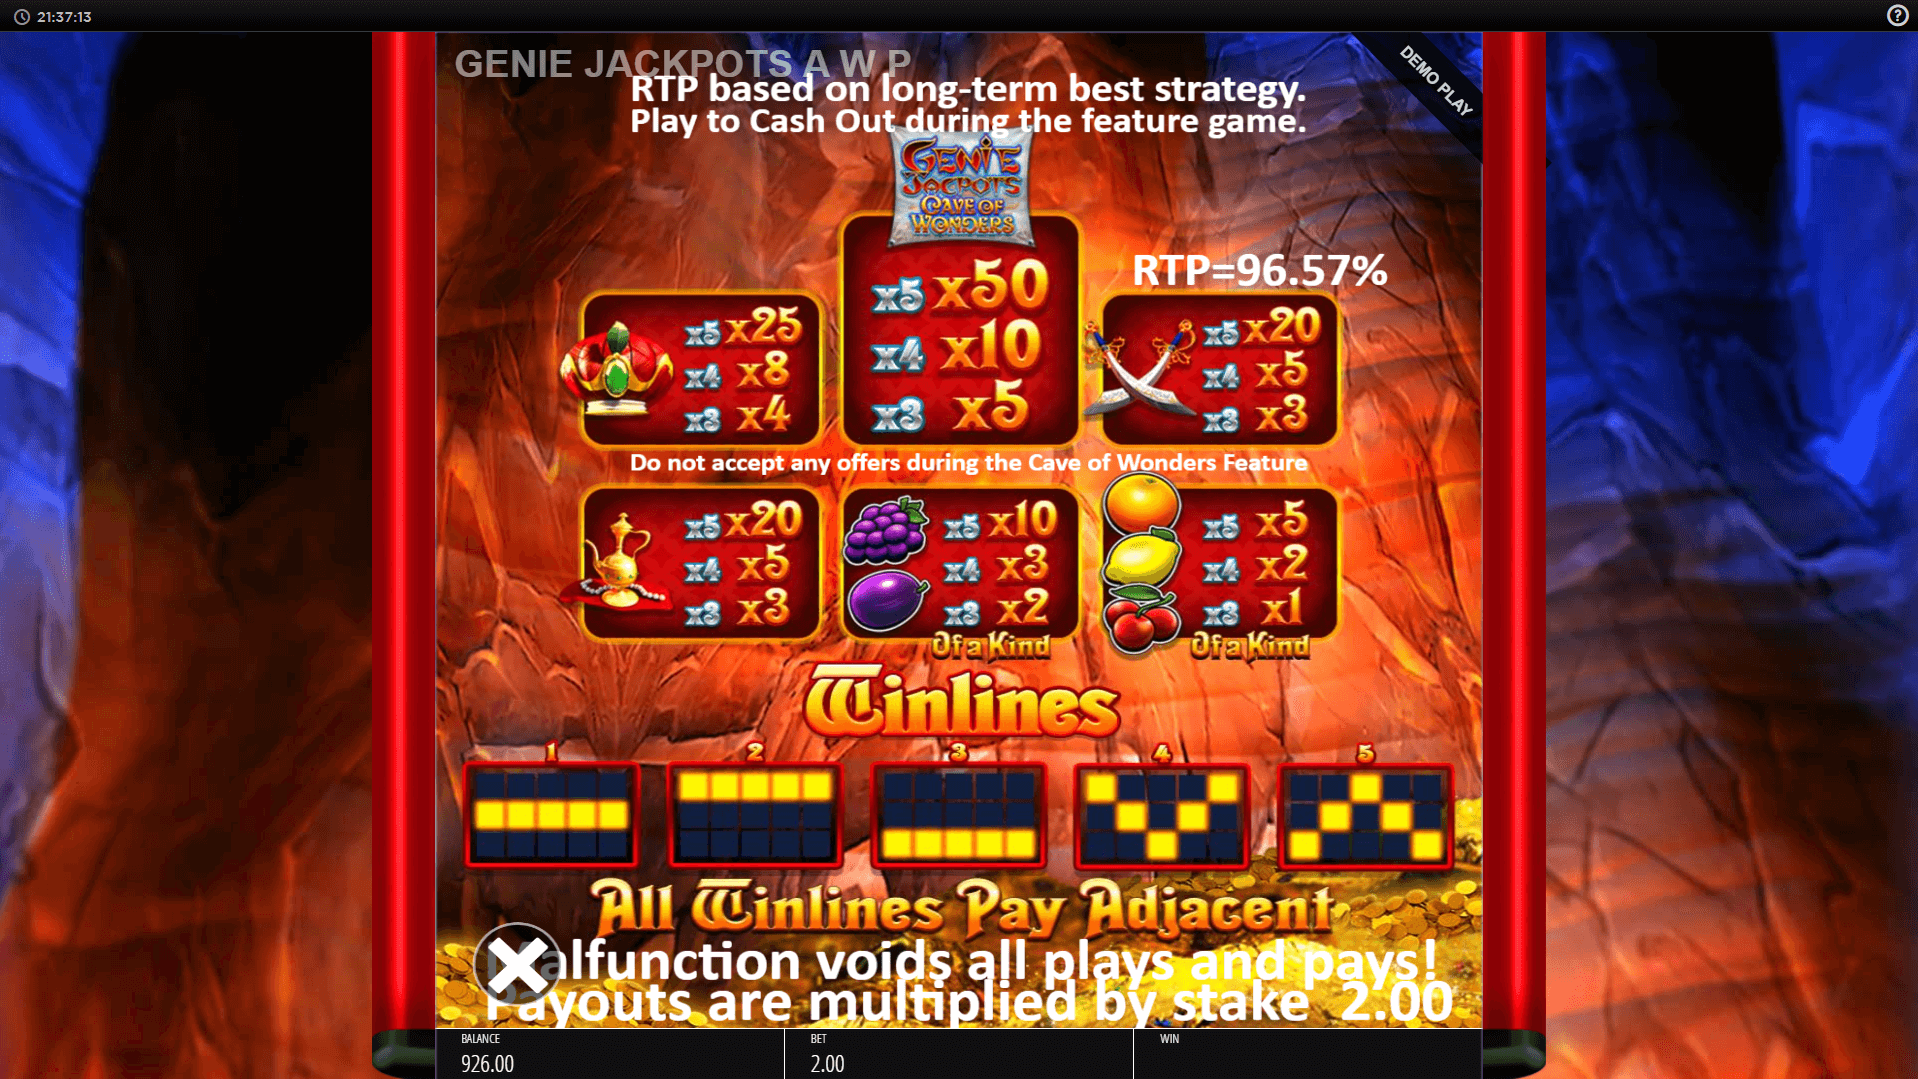 genie jackpots cave of wonders slot machine detail image 2